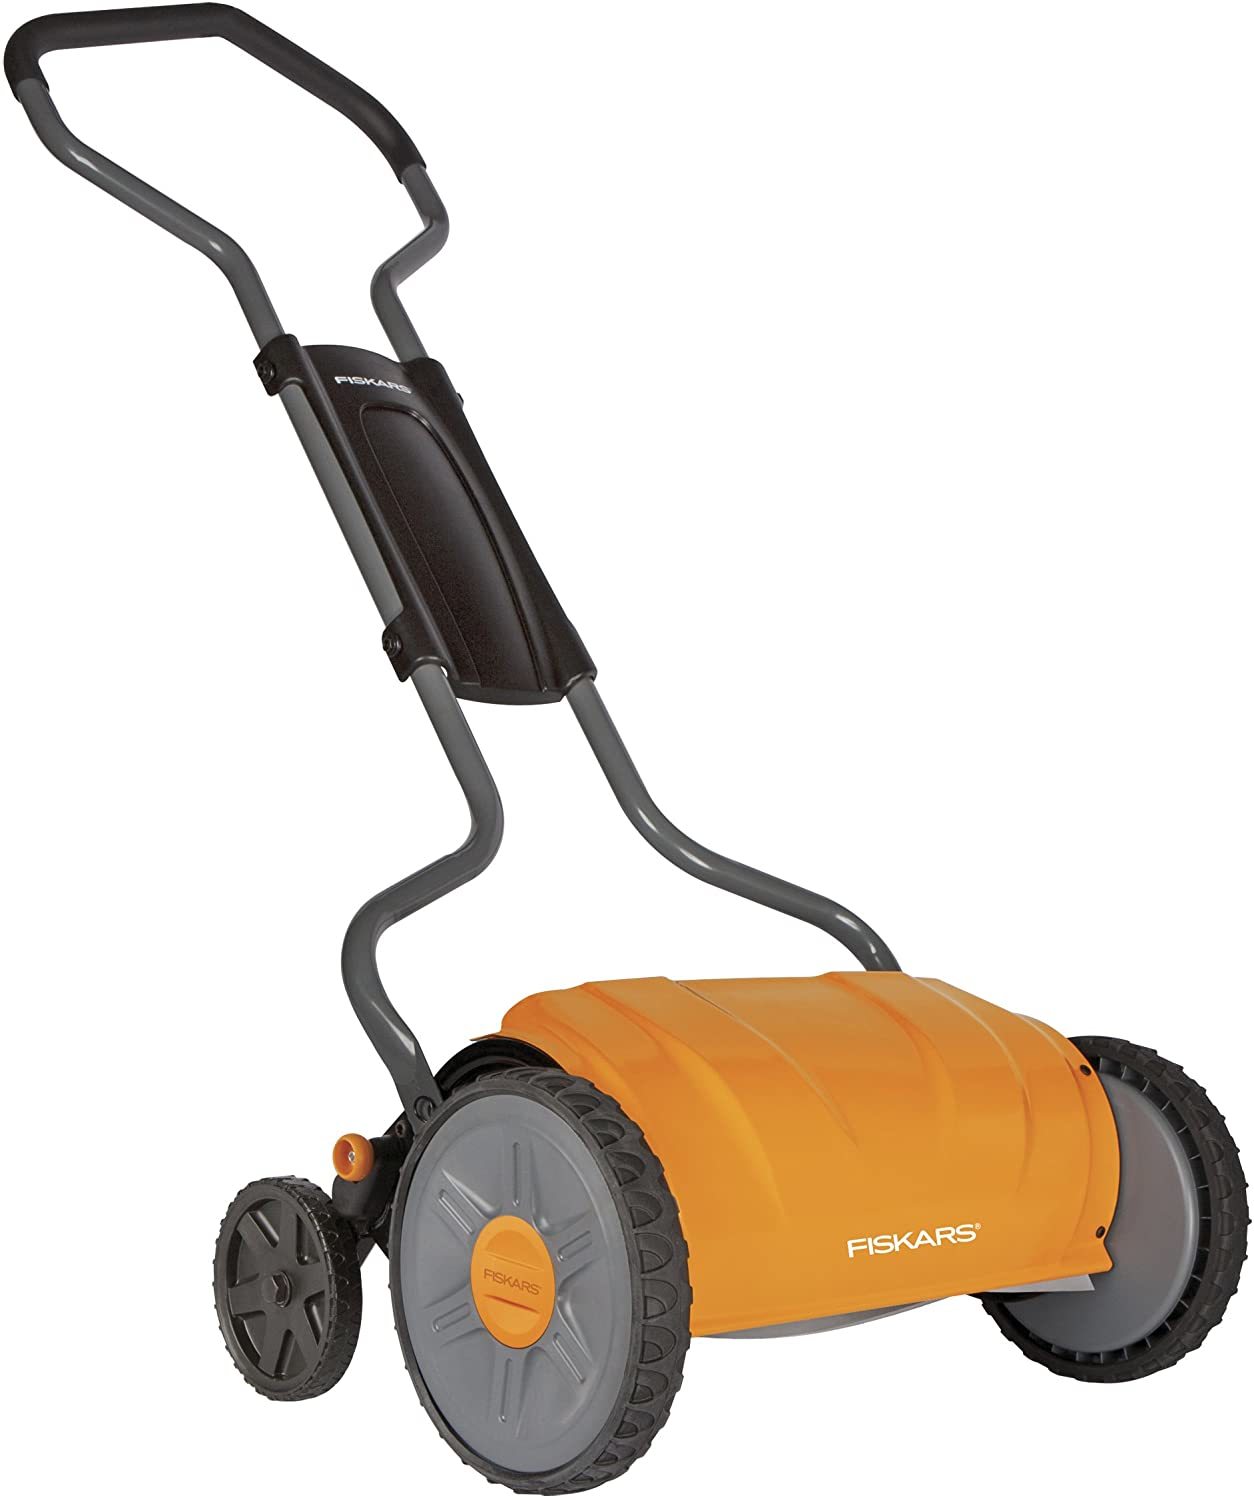 Fiskars 17 Inch Staysharp Push Reel Lawn Mower (6208), Orange - $259.99